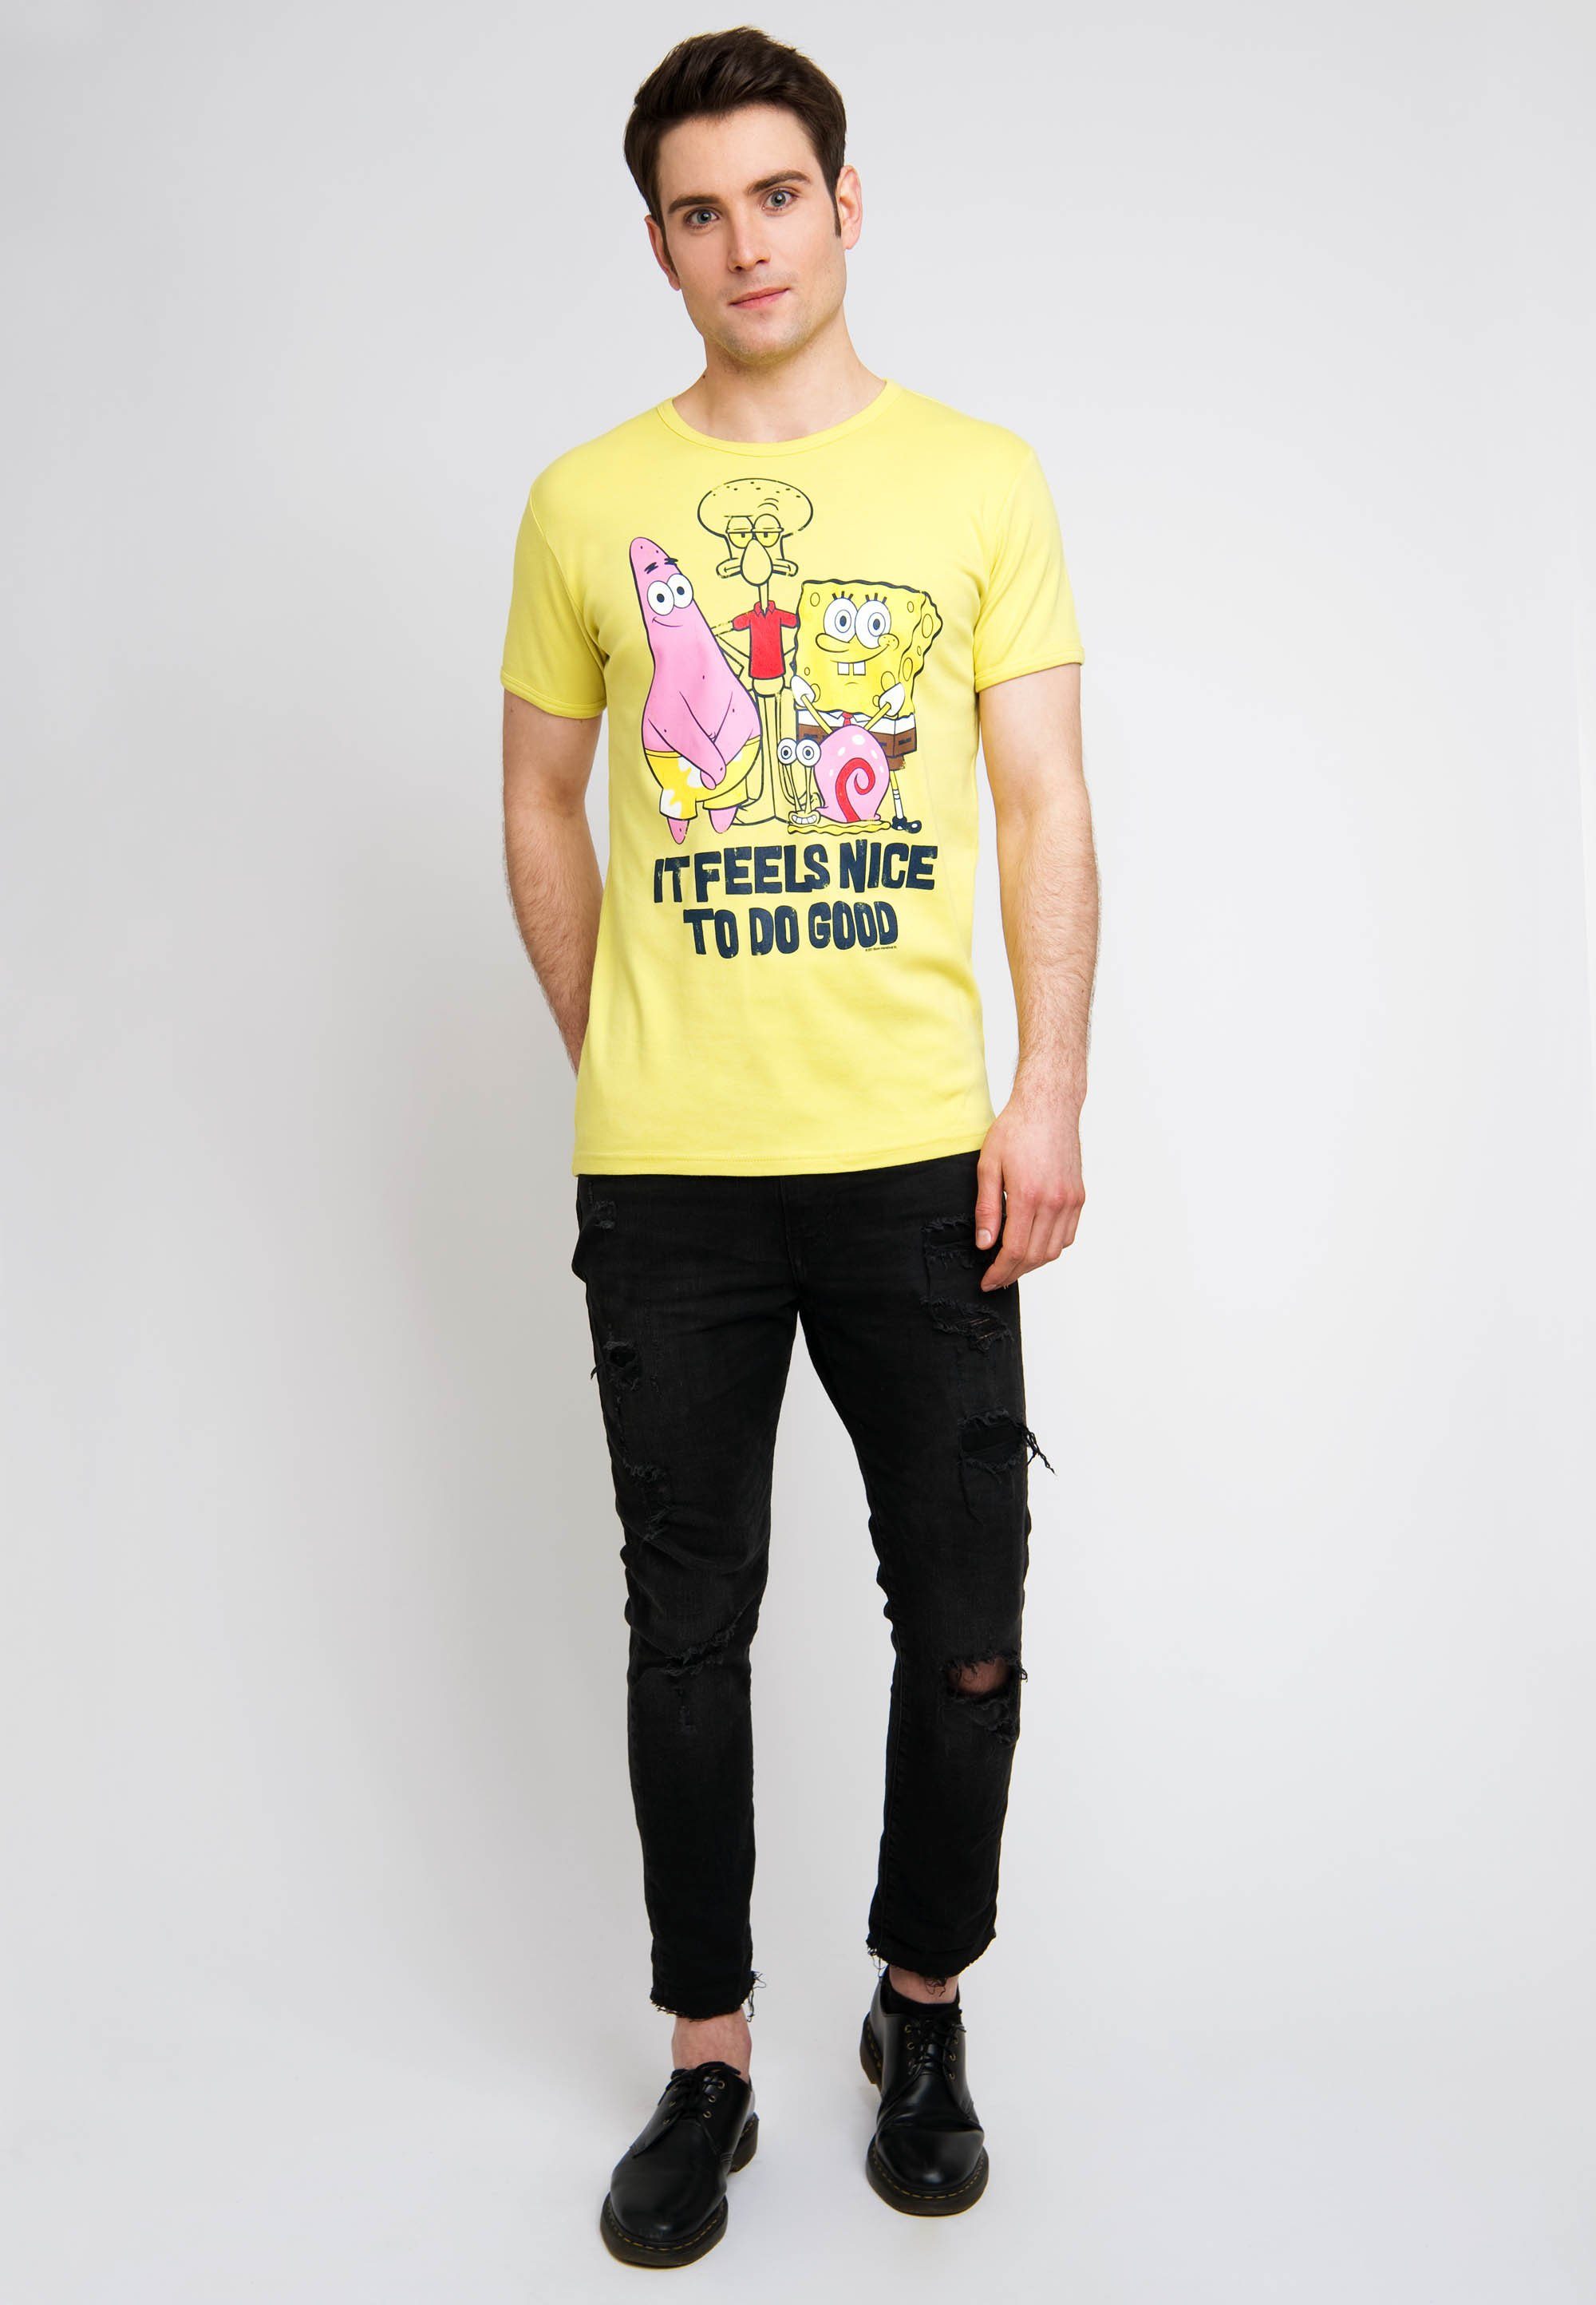 LOGOSHIRT T-Shirt Spongebob Statement-Print mit witzigem